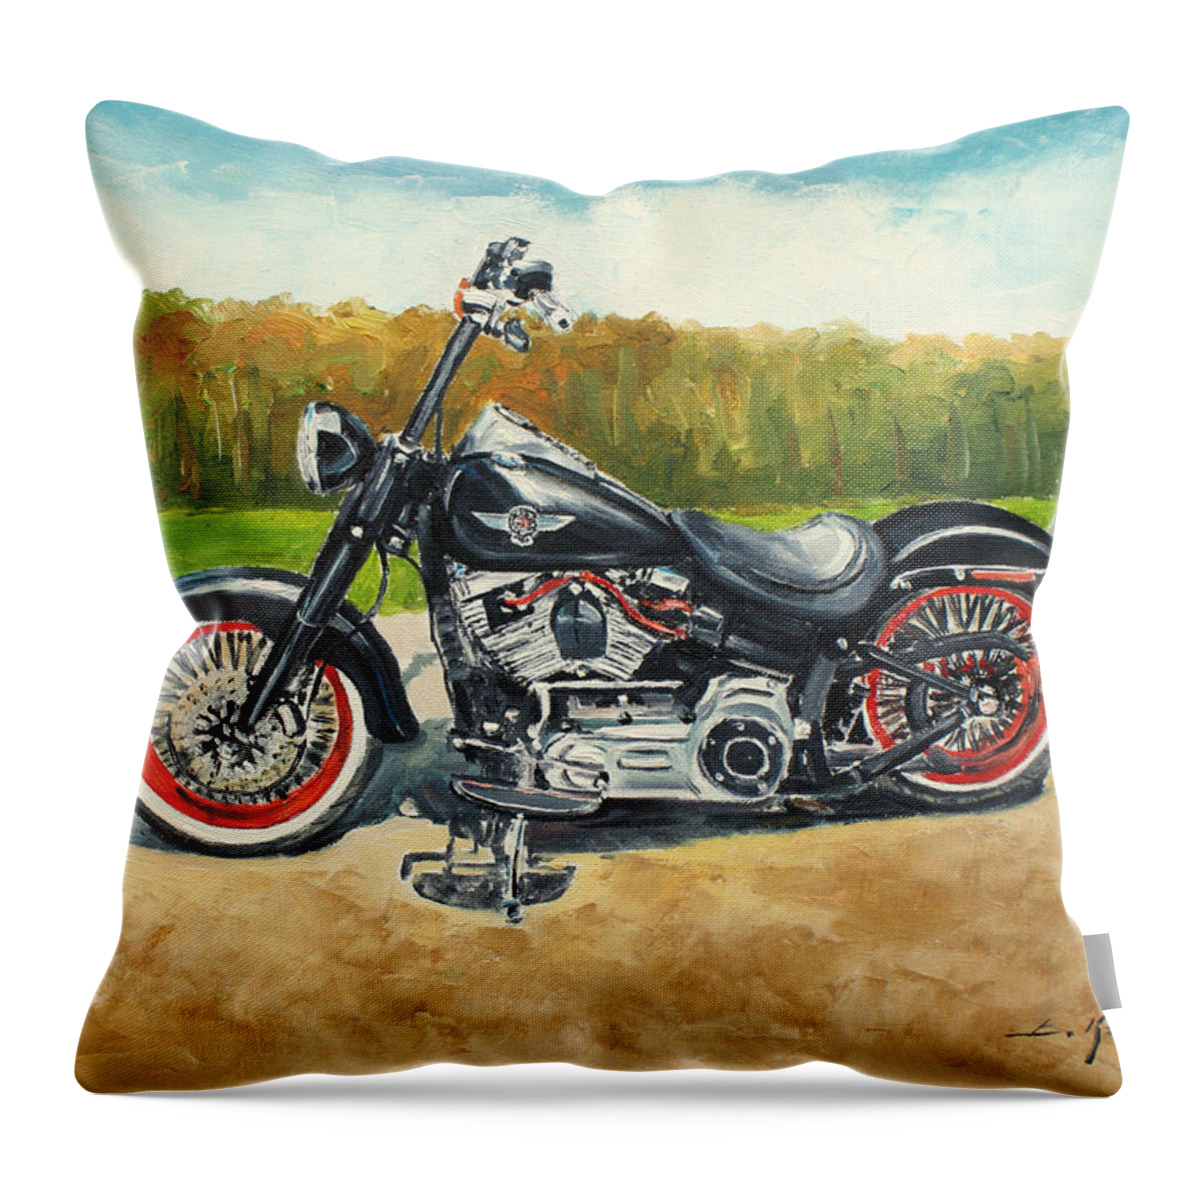 Harley Davidson Throw Pillow featuring the painting Harley Davidson #2 by Luke Karcz